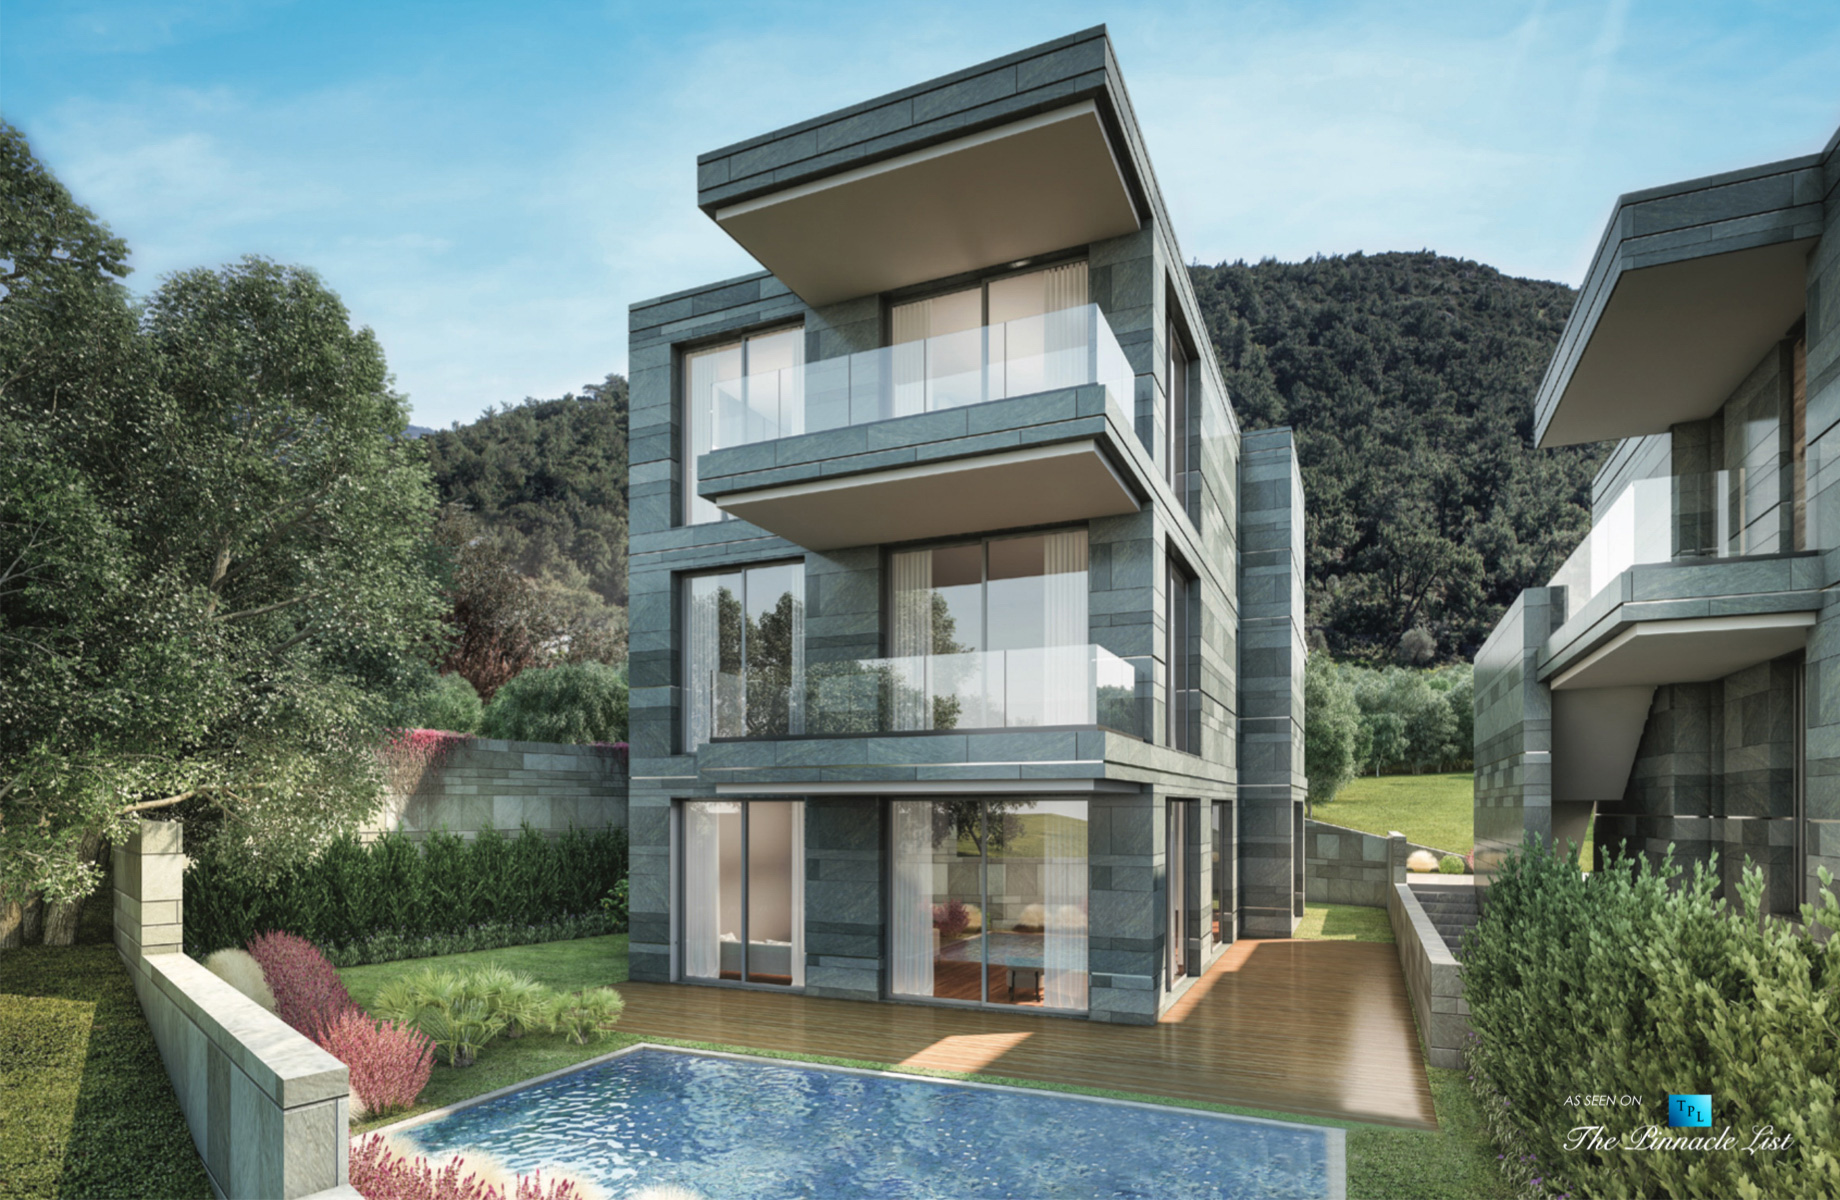 Apartment C10 - Swissotel Residences Bodrum Hill - Bodrum, Turkey